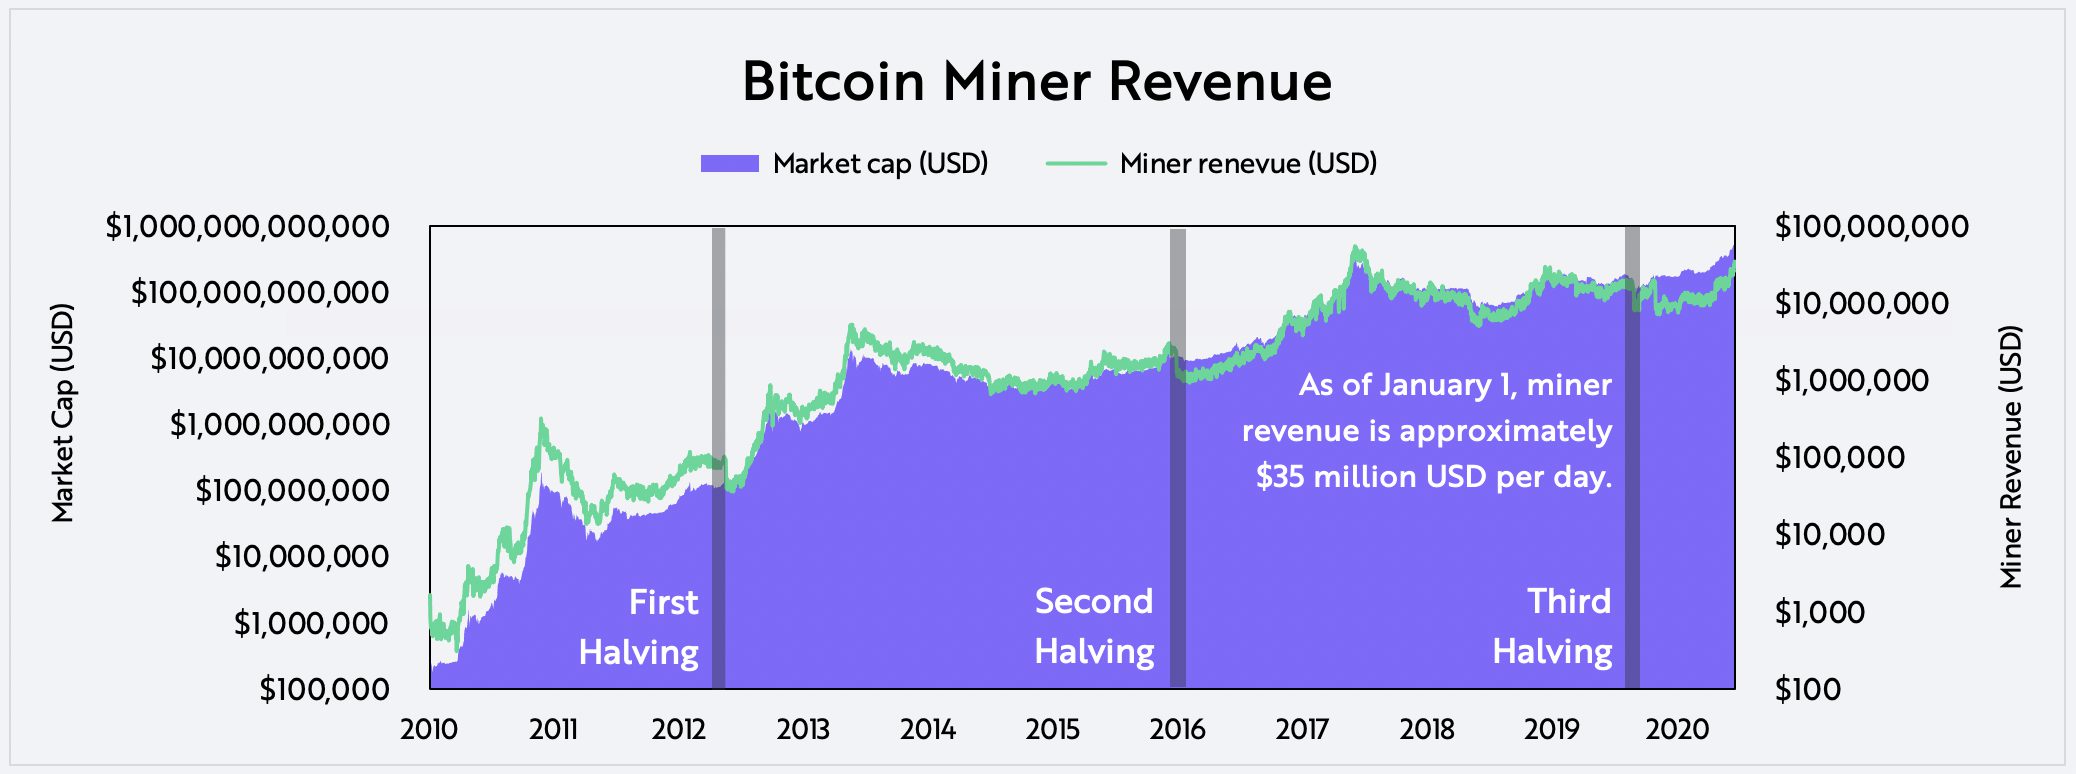 Evaluating Bitcoin Miner Revenue on-chain data